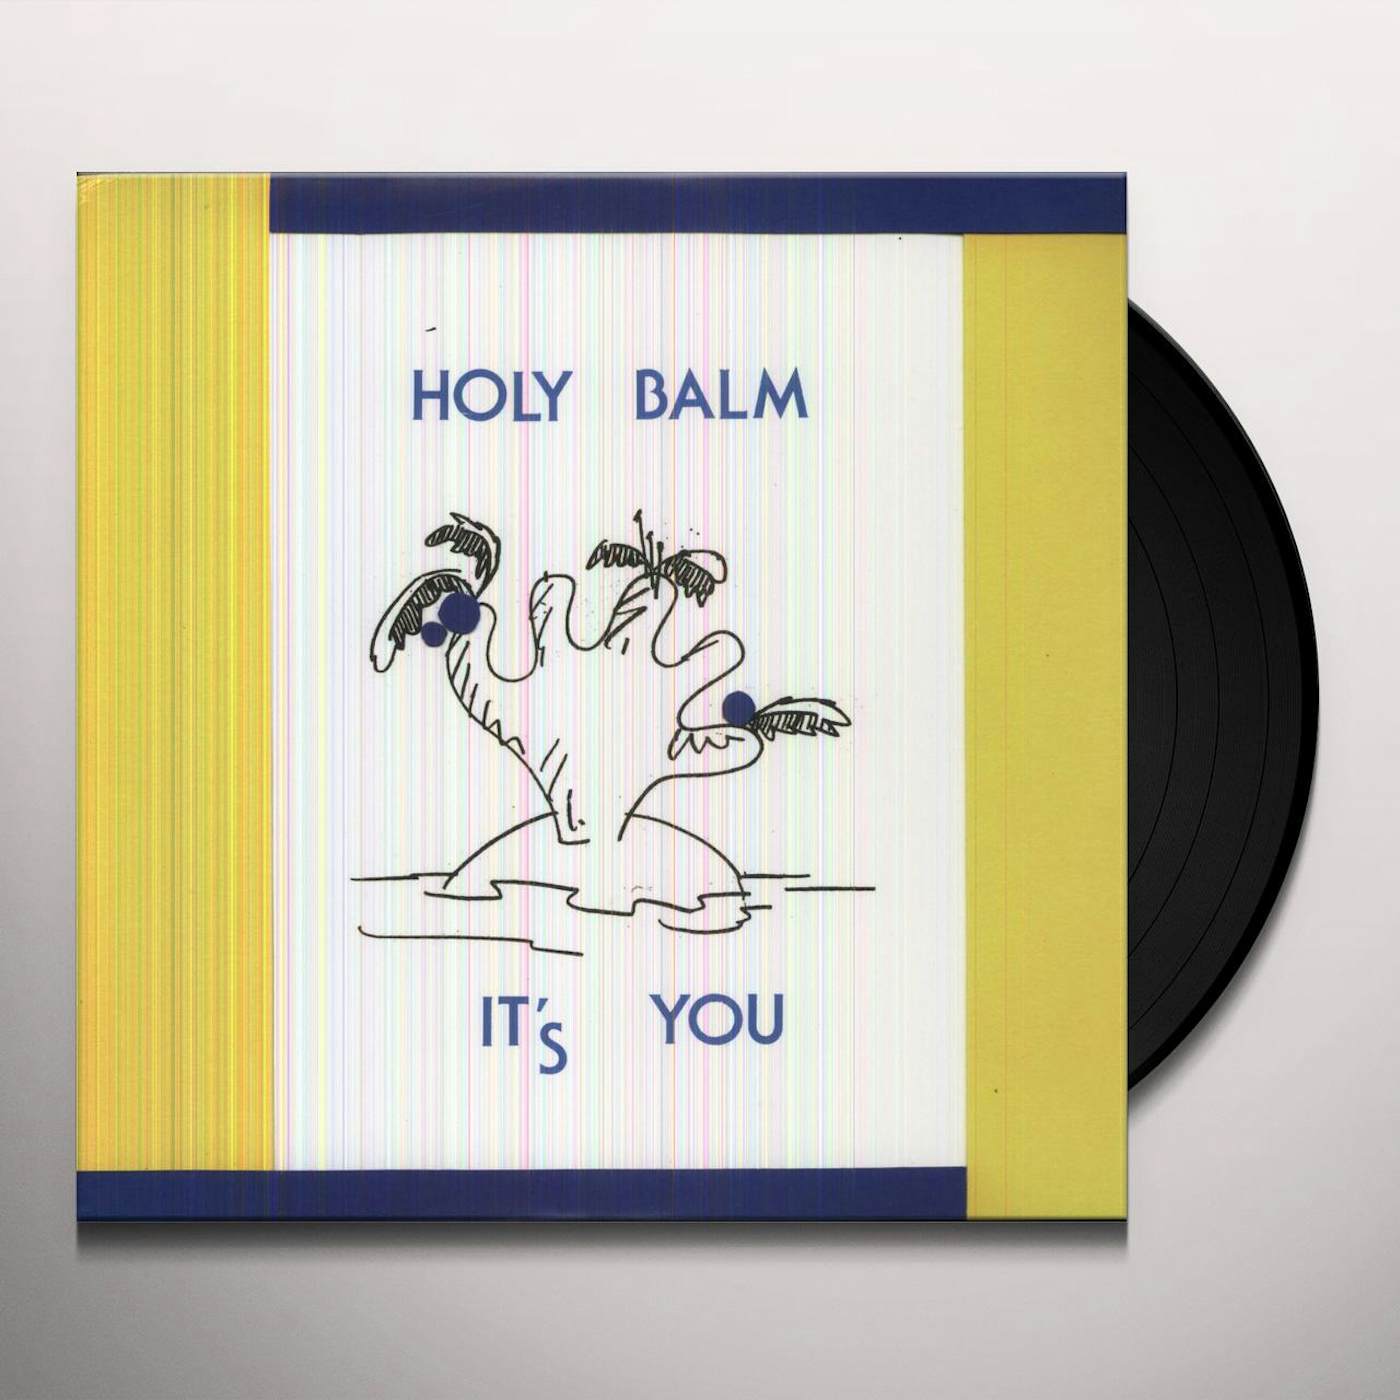 Holy Balm It's You Vinyl Record